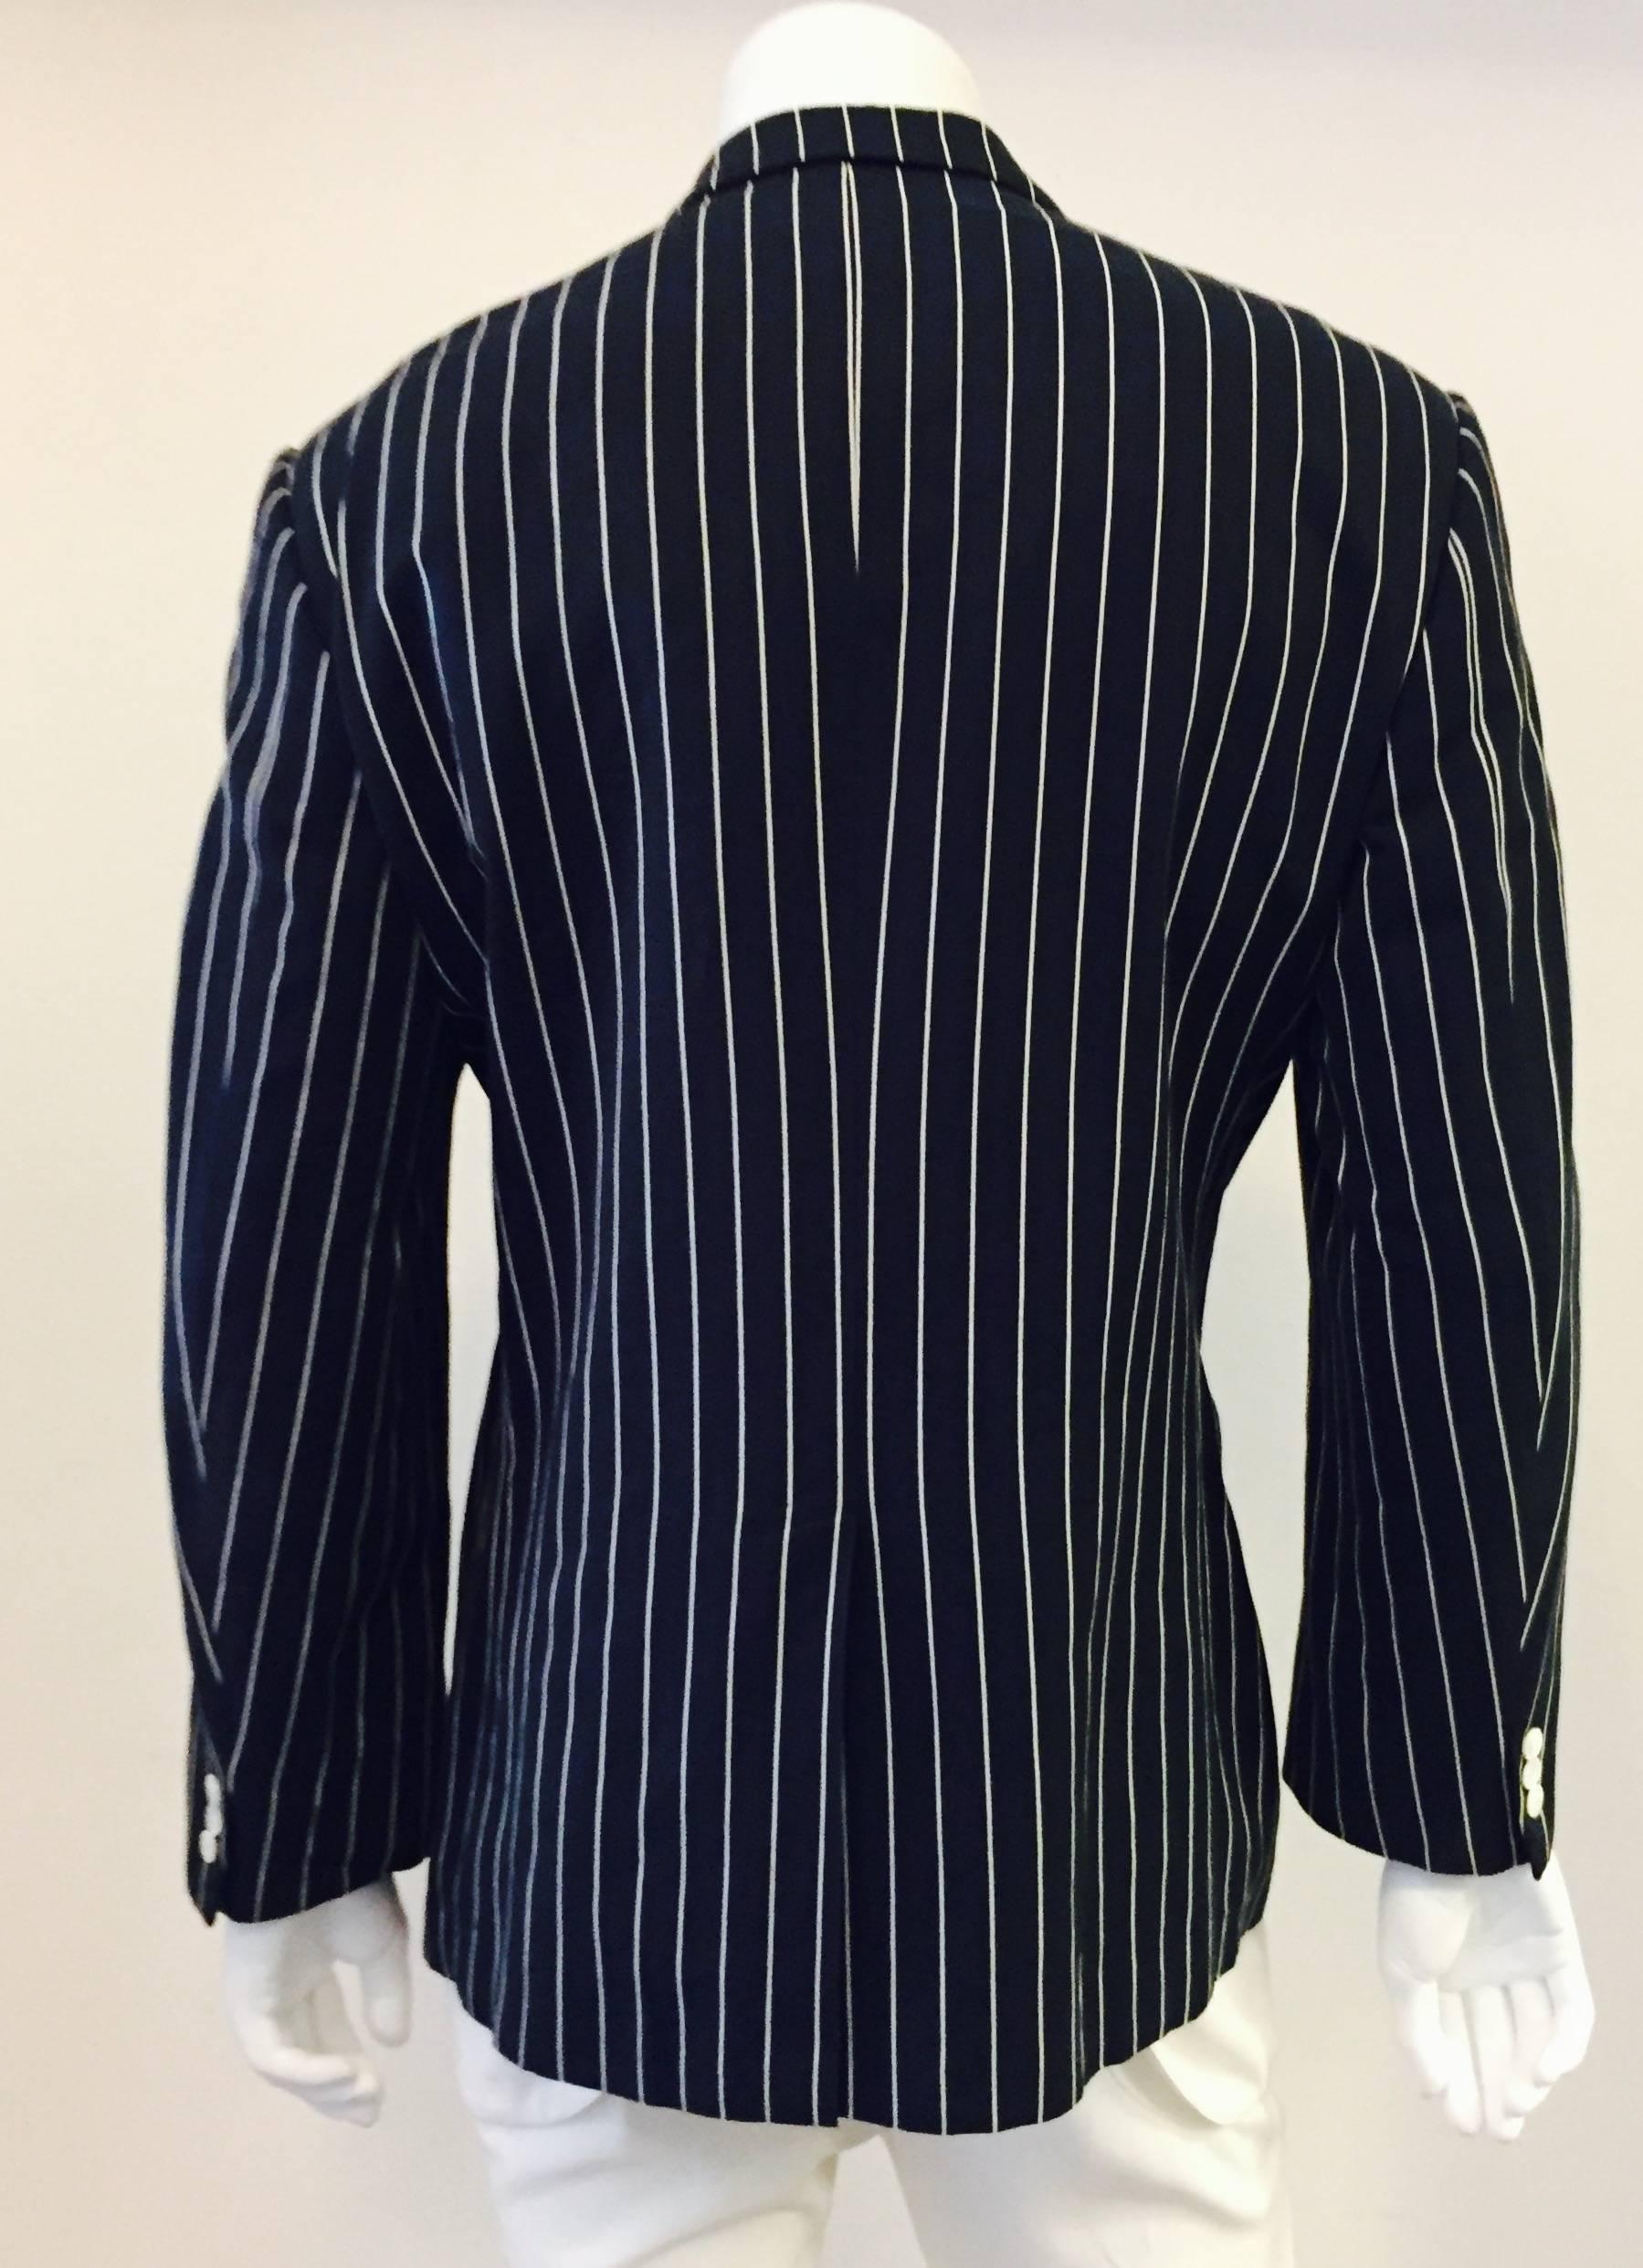 Black Men's Brioni for Maus & Hoffman Cotton & Linen Stripe Jacket Navy & White